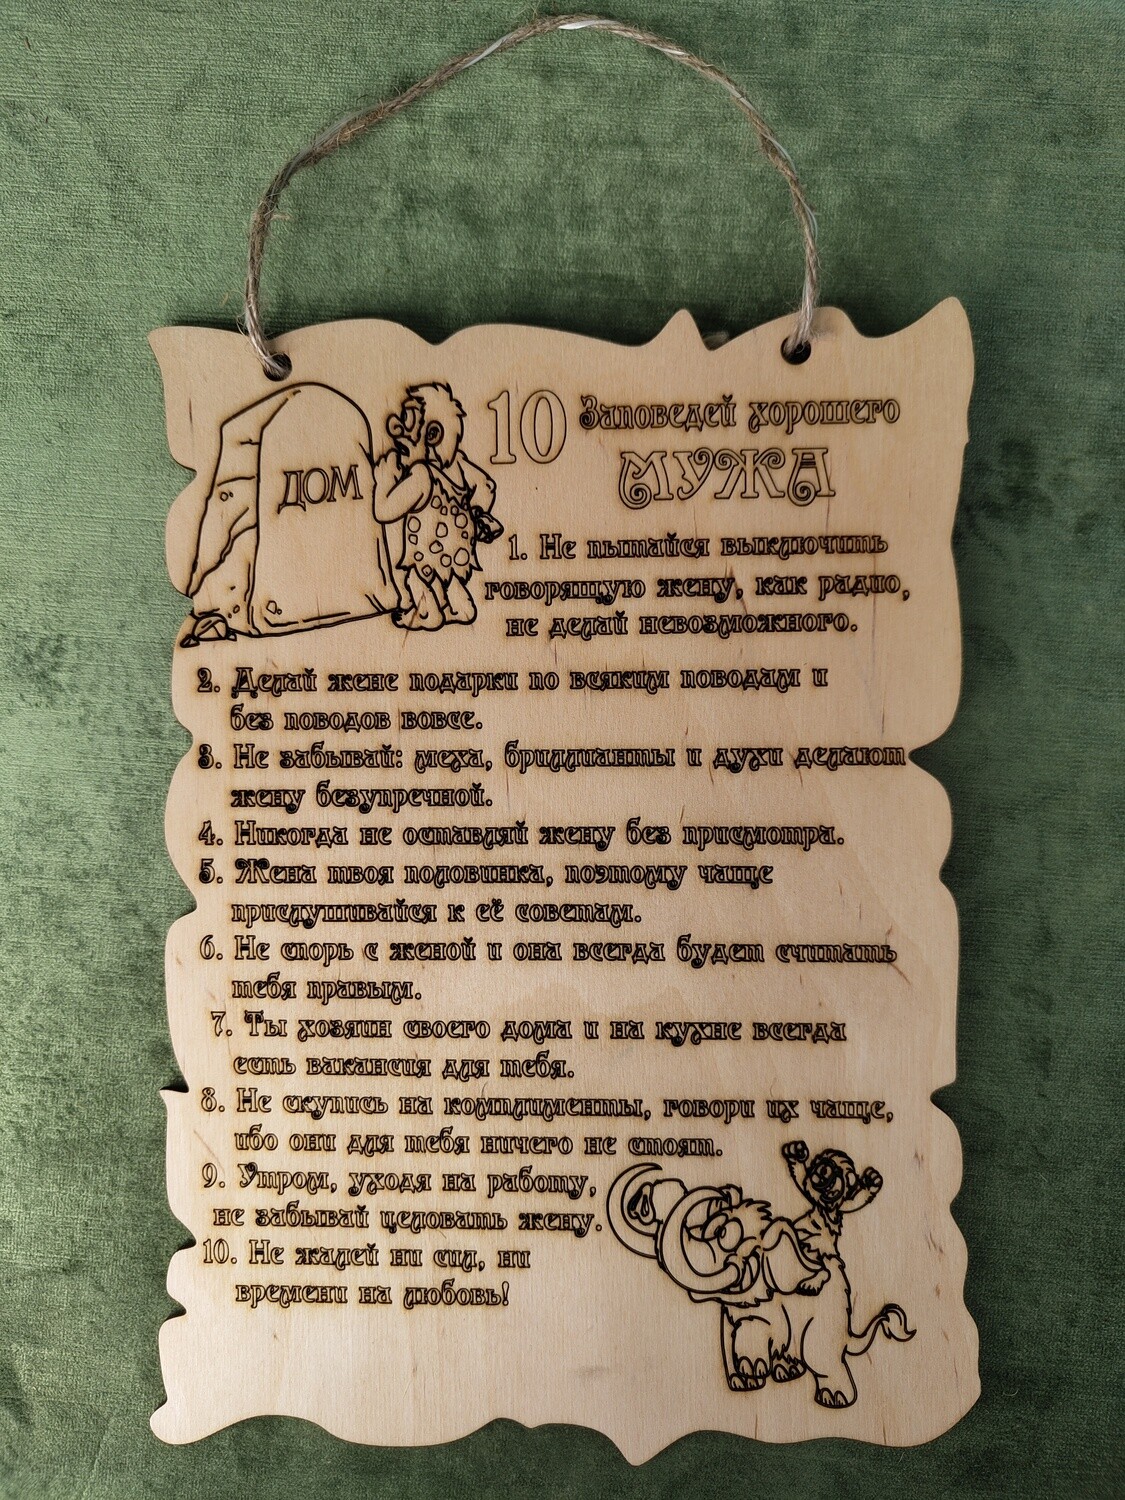 Plāksne ar uzrakstu "10 заповедей хорошего мужа"